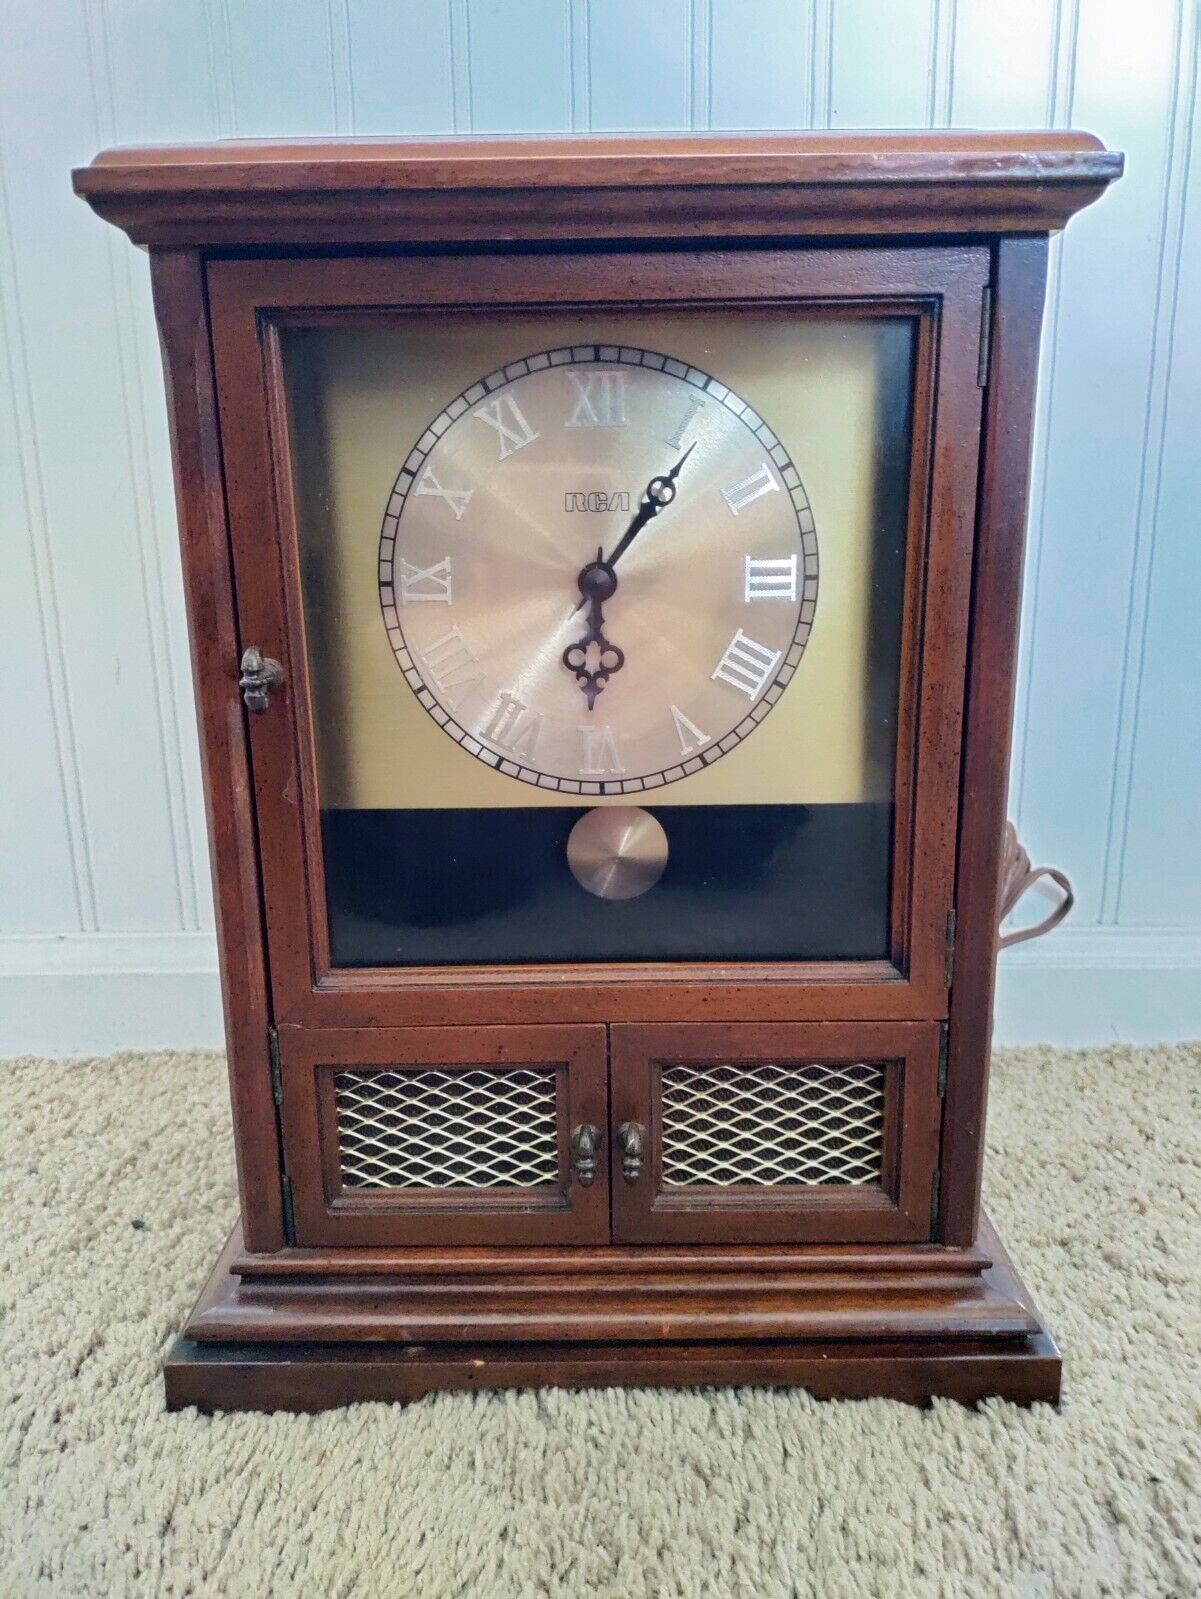 Antique RCA Mantel Clock Radio. Model RZS-61F